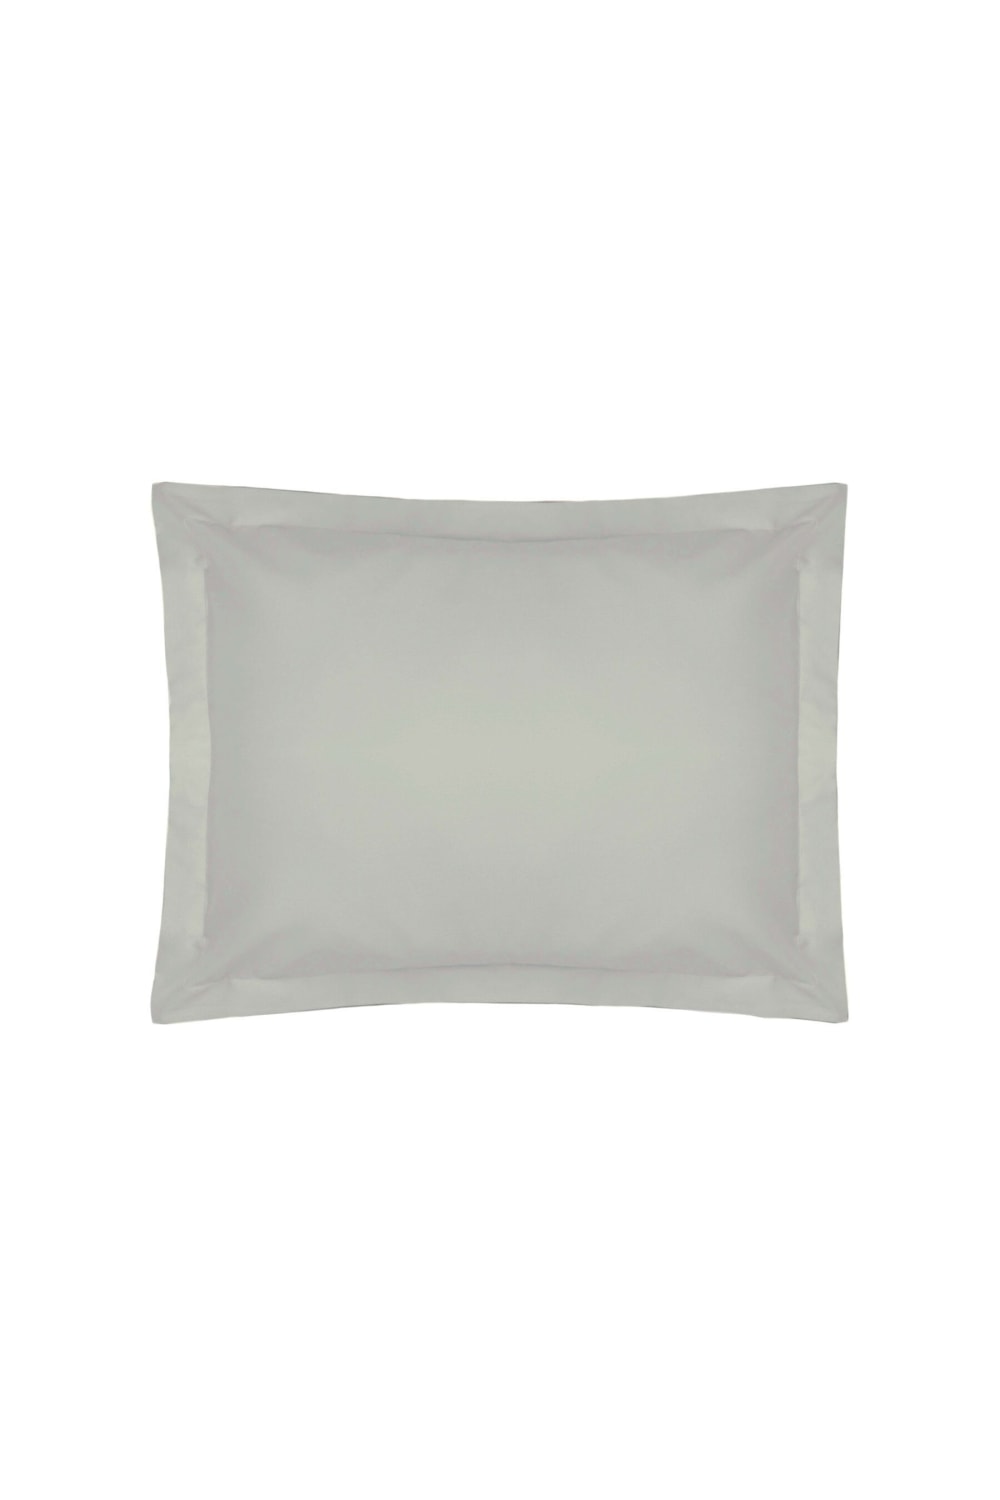 Belledorm Sateen Oxford Pillowcase (Platinum Grey) (One Size)